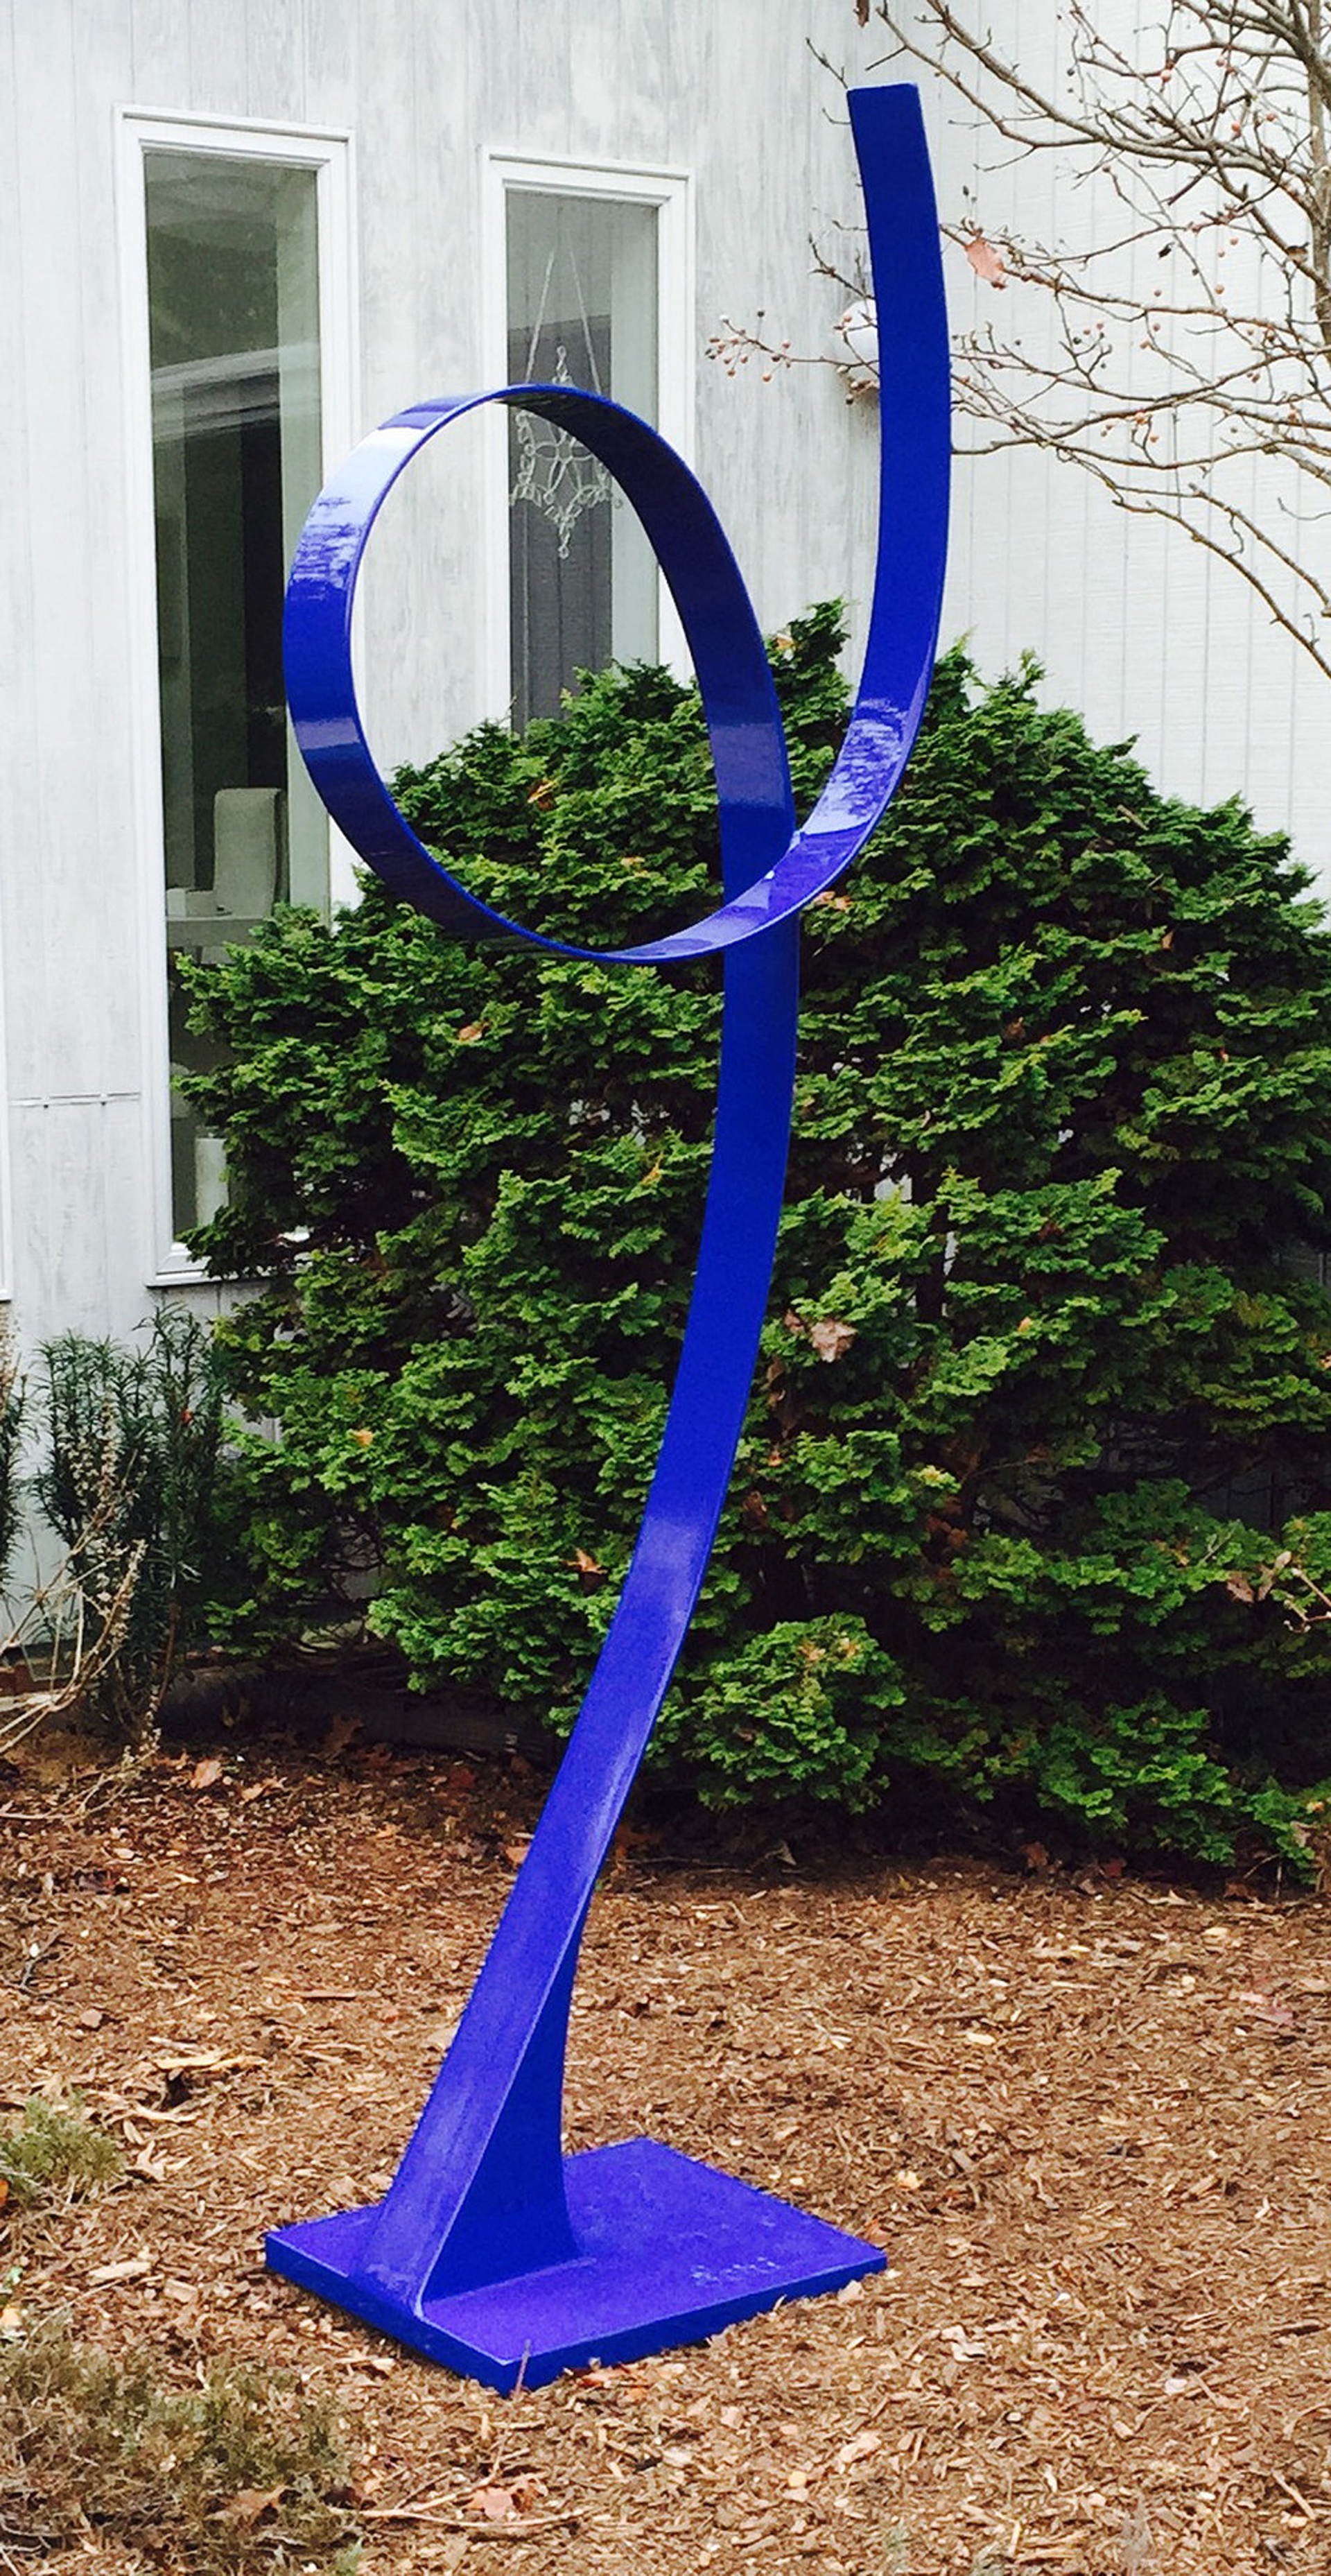 Blue Ribbon 2 by Dennis Leri